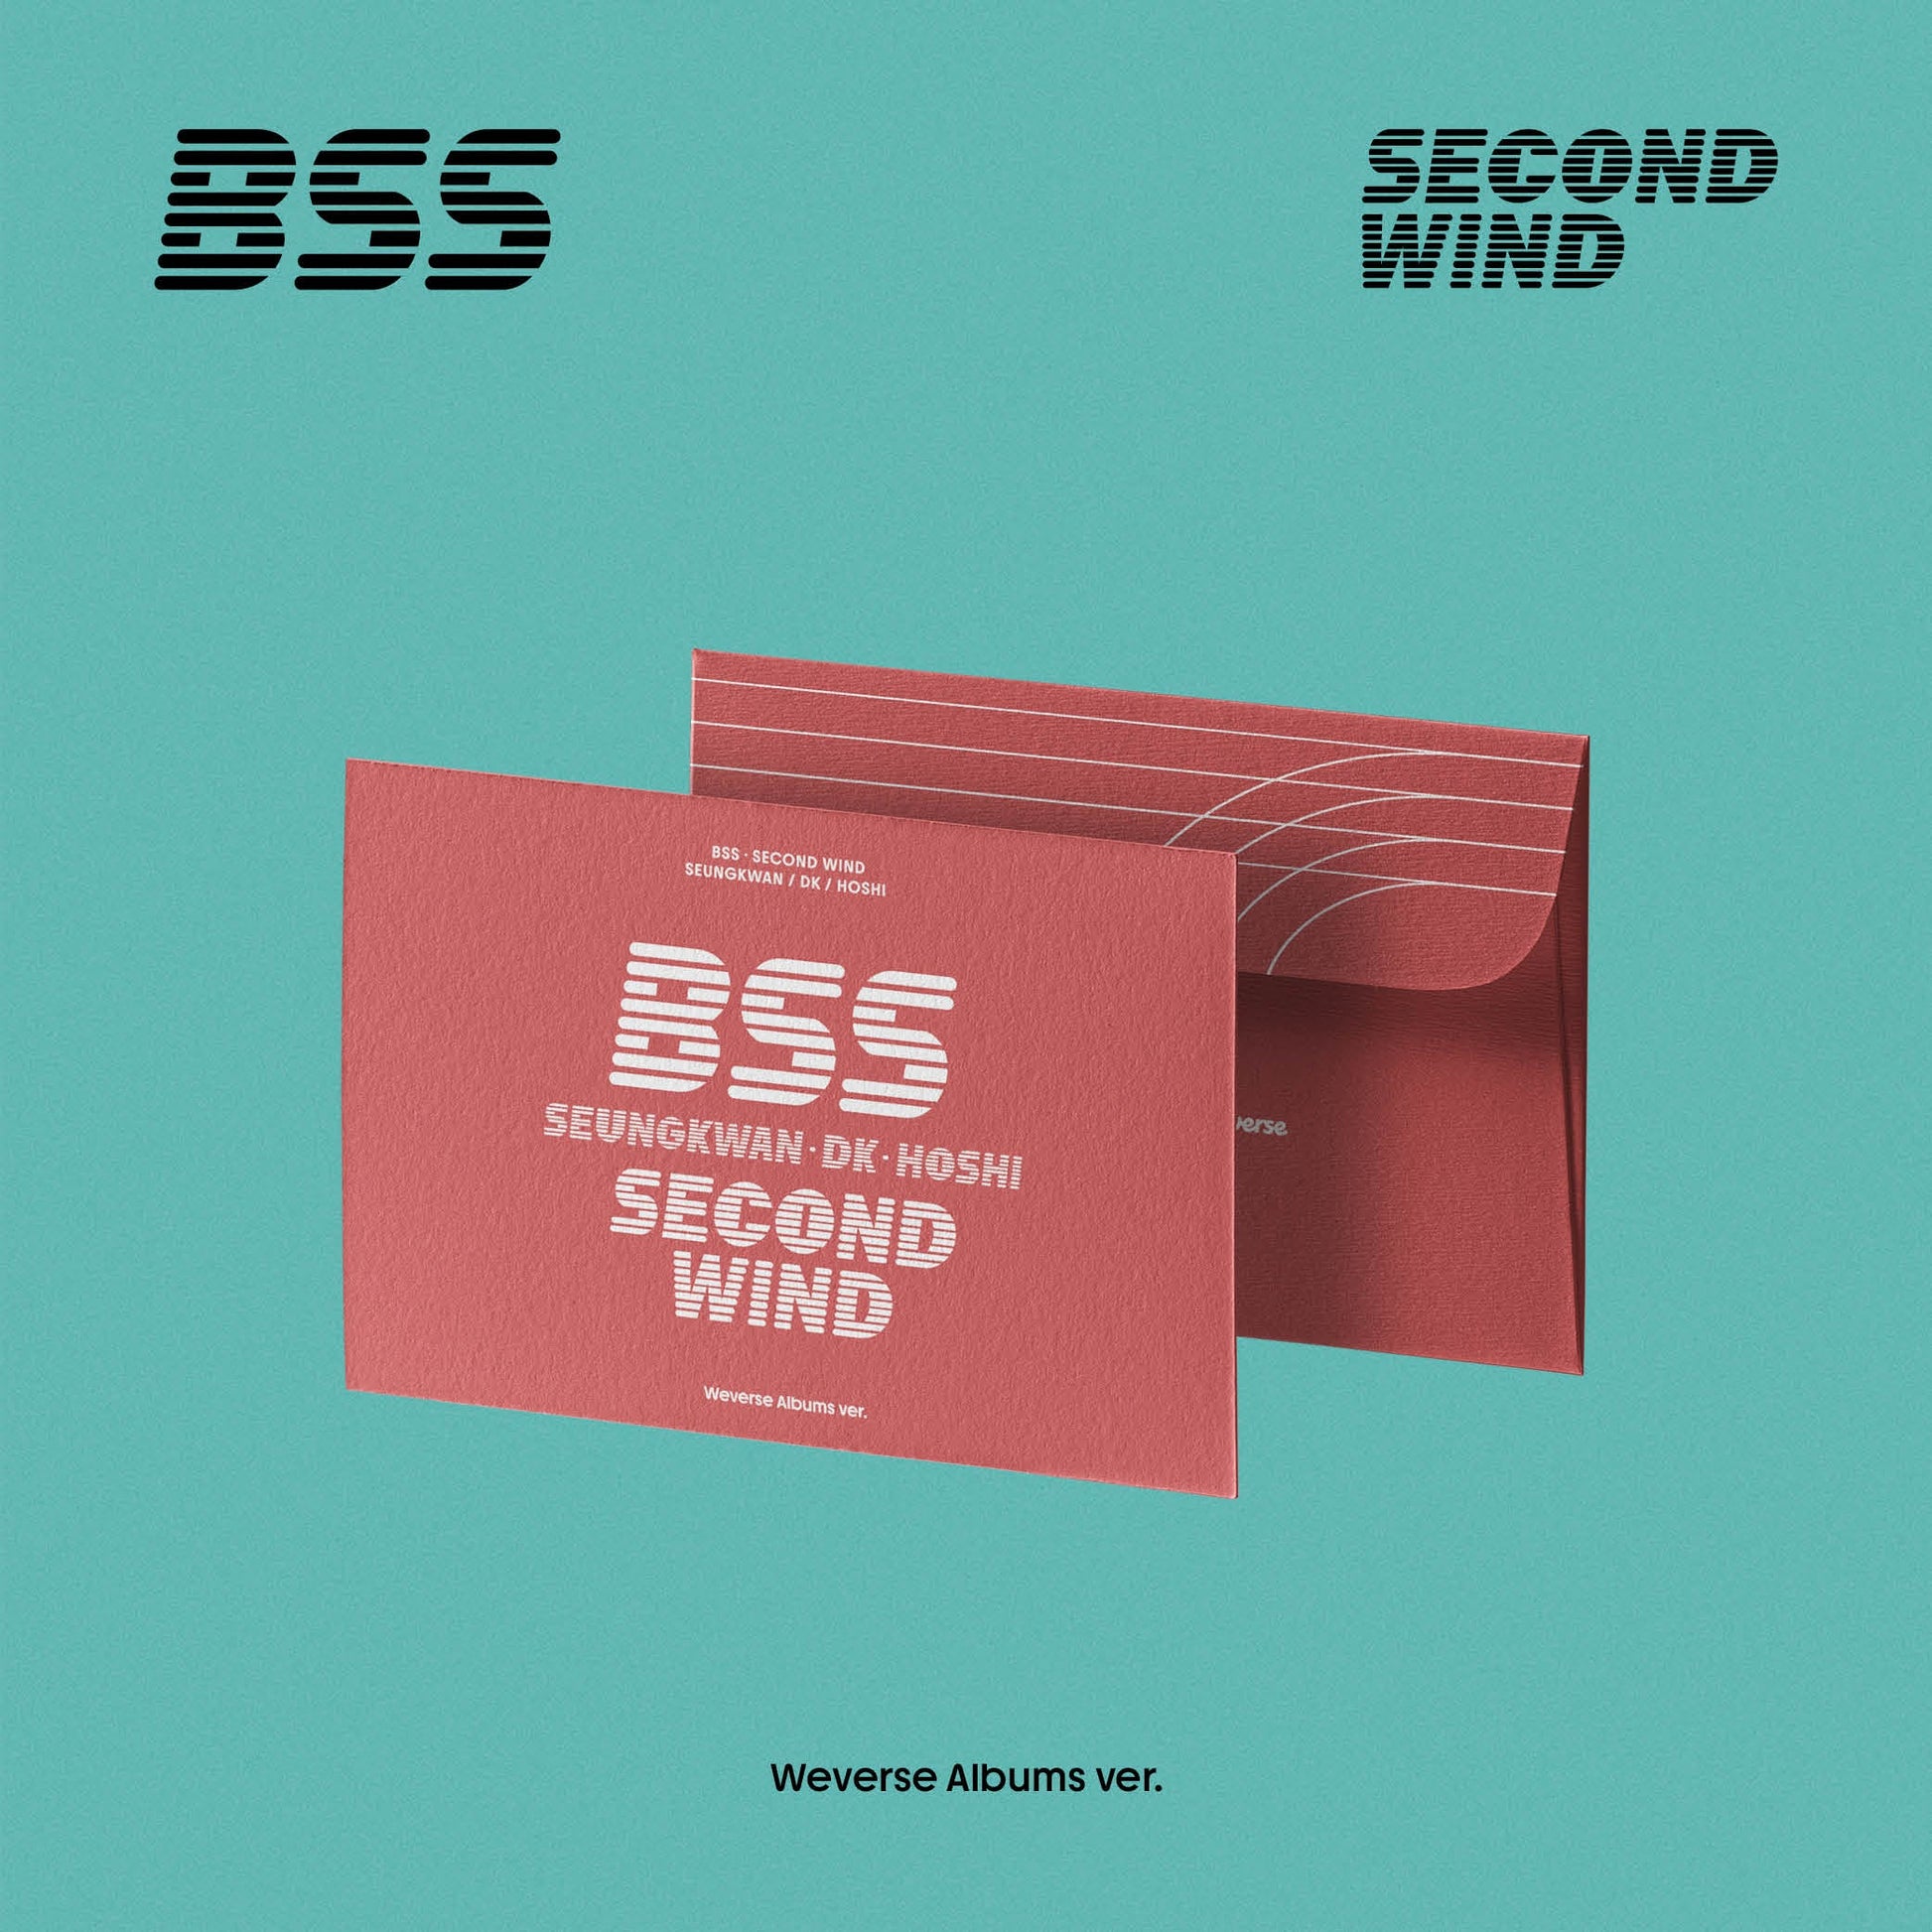 BSS (SEVENTEEN) 1ST SINGLE ALBUM 'SECOND WIND' (WEVERSE) COVER